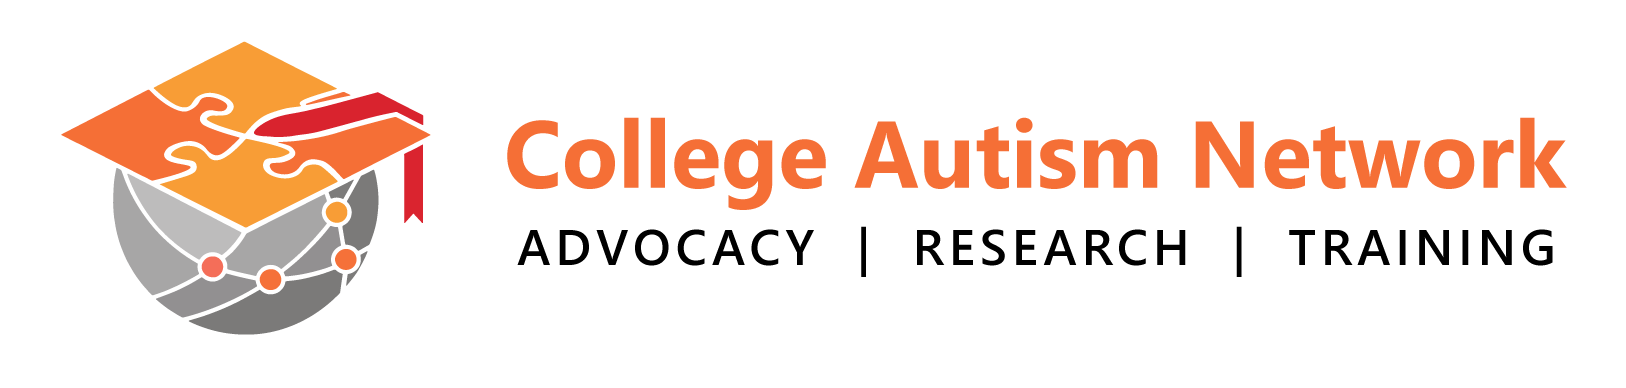 College Autism Network